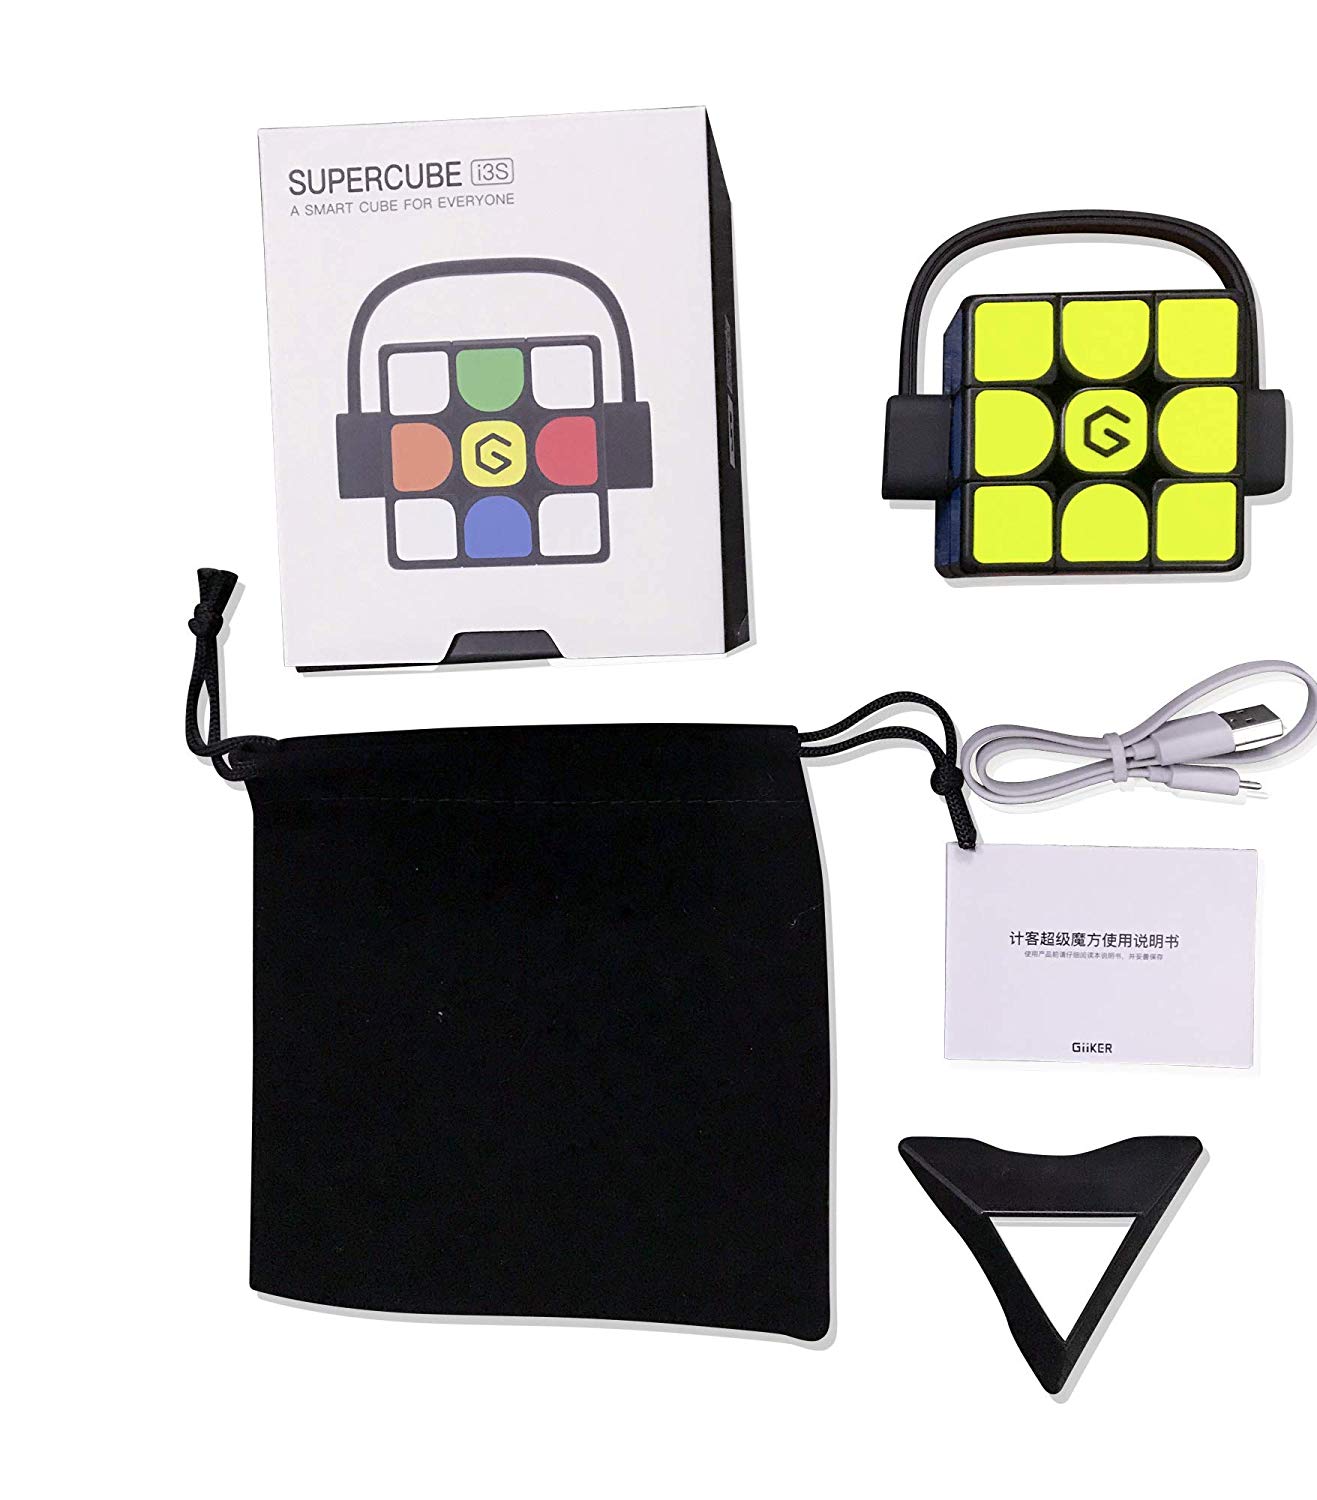 Melesoft - Ηλεκτρονικό Κατάστημα - Online Store. GiiKER Super Cube i3  Special Edition